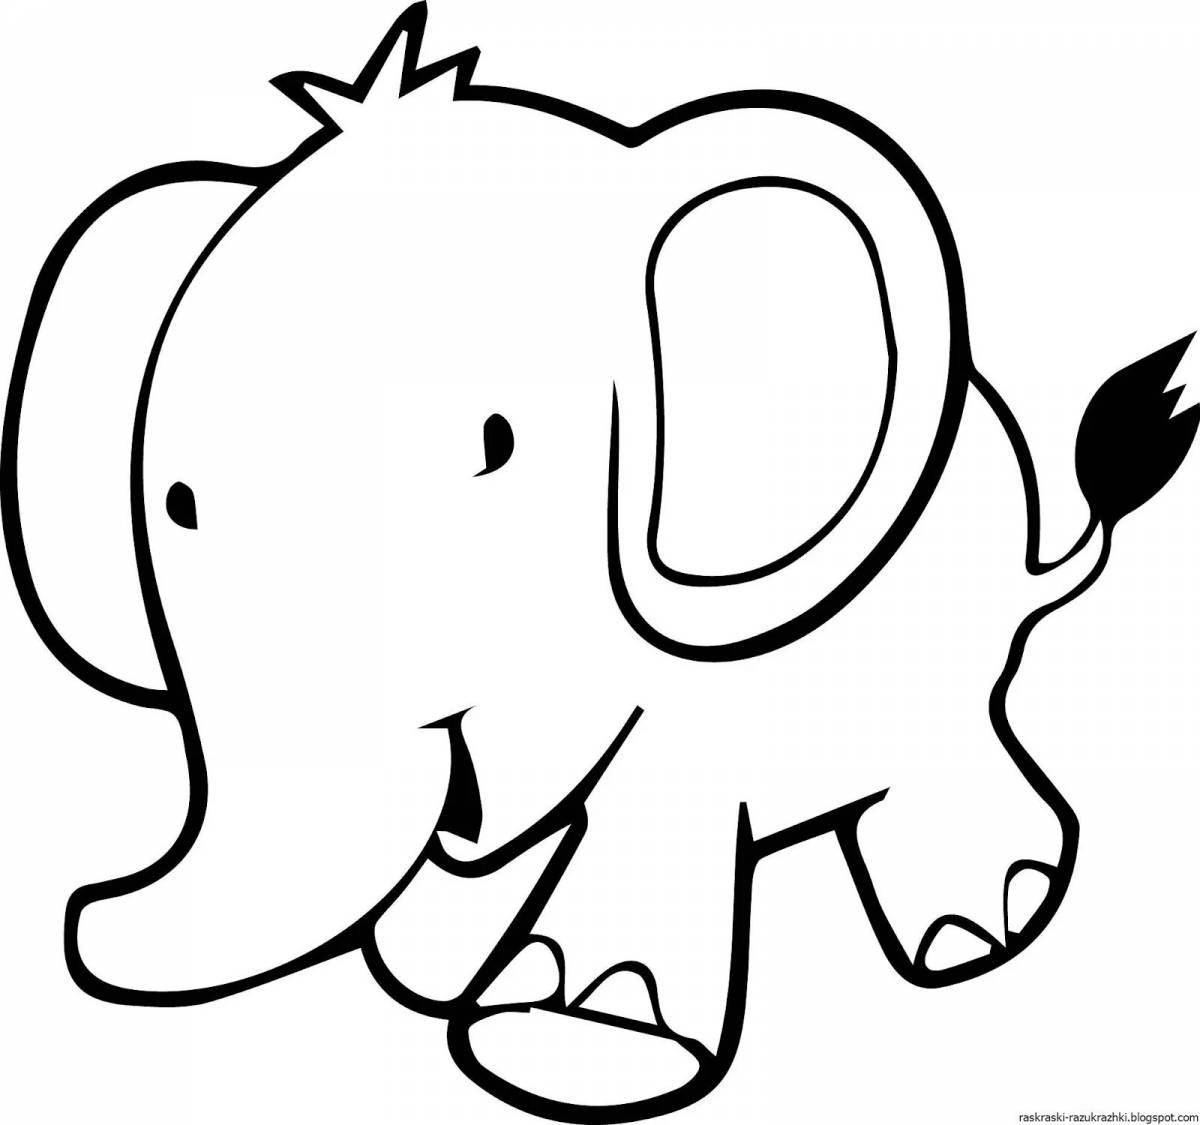 Coloring playful elephant